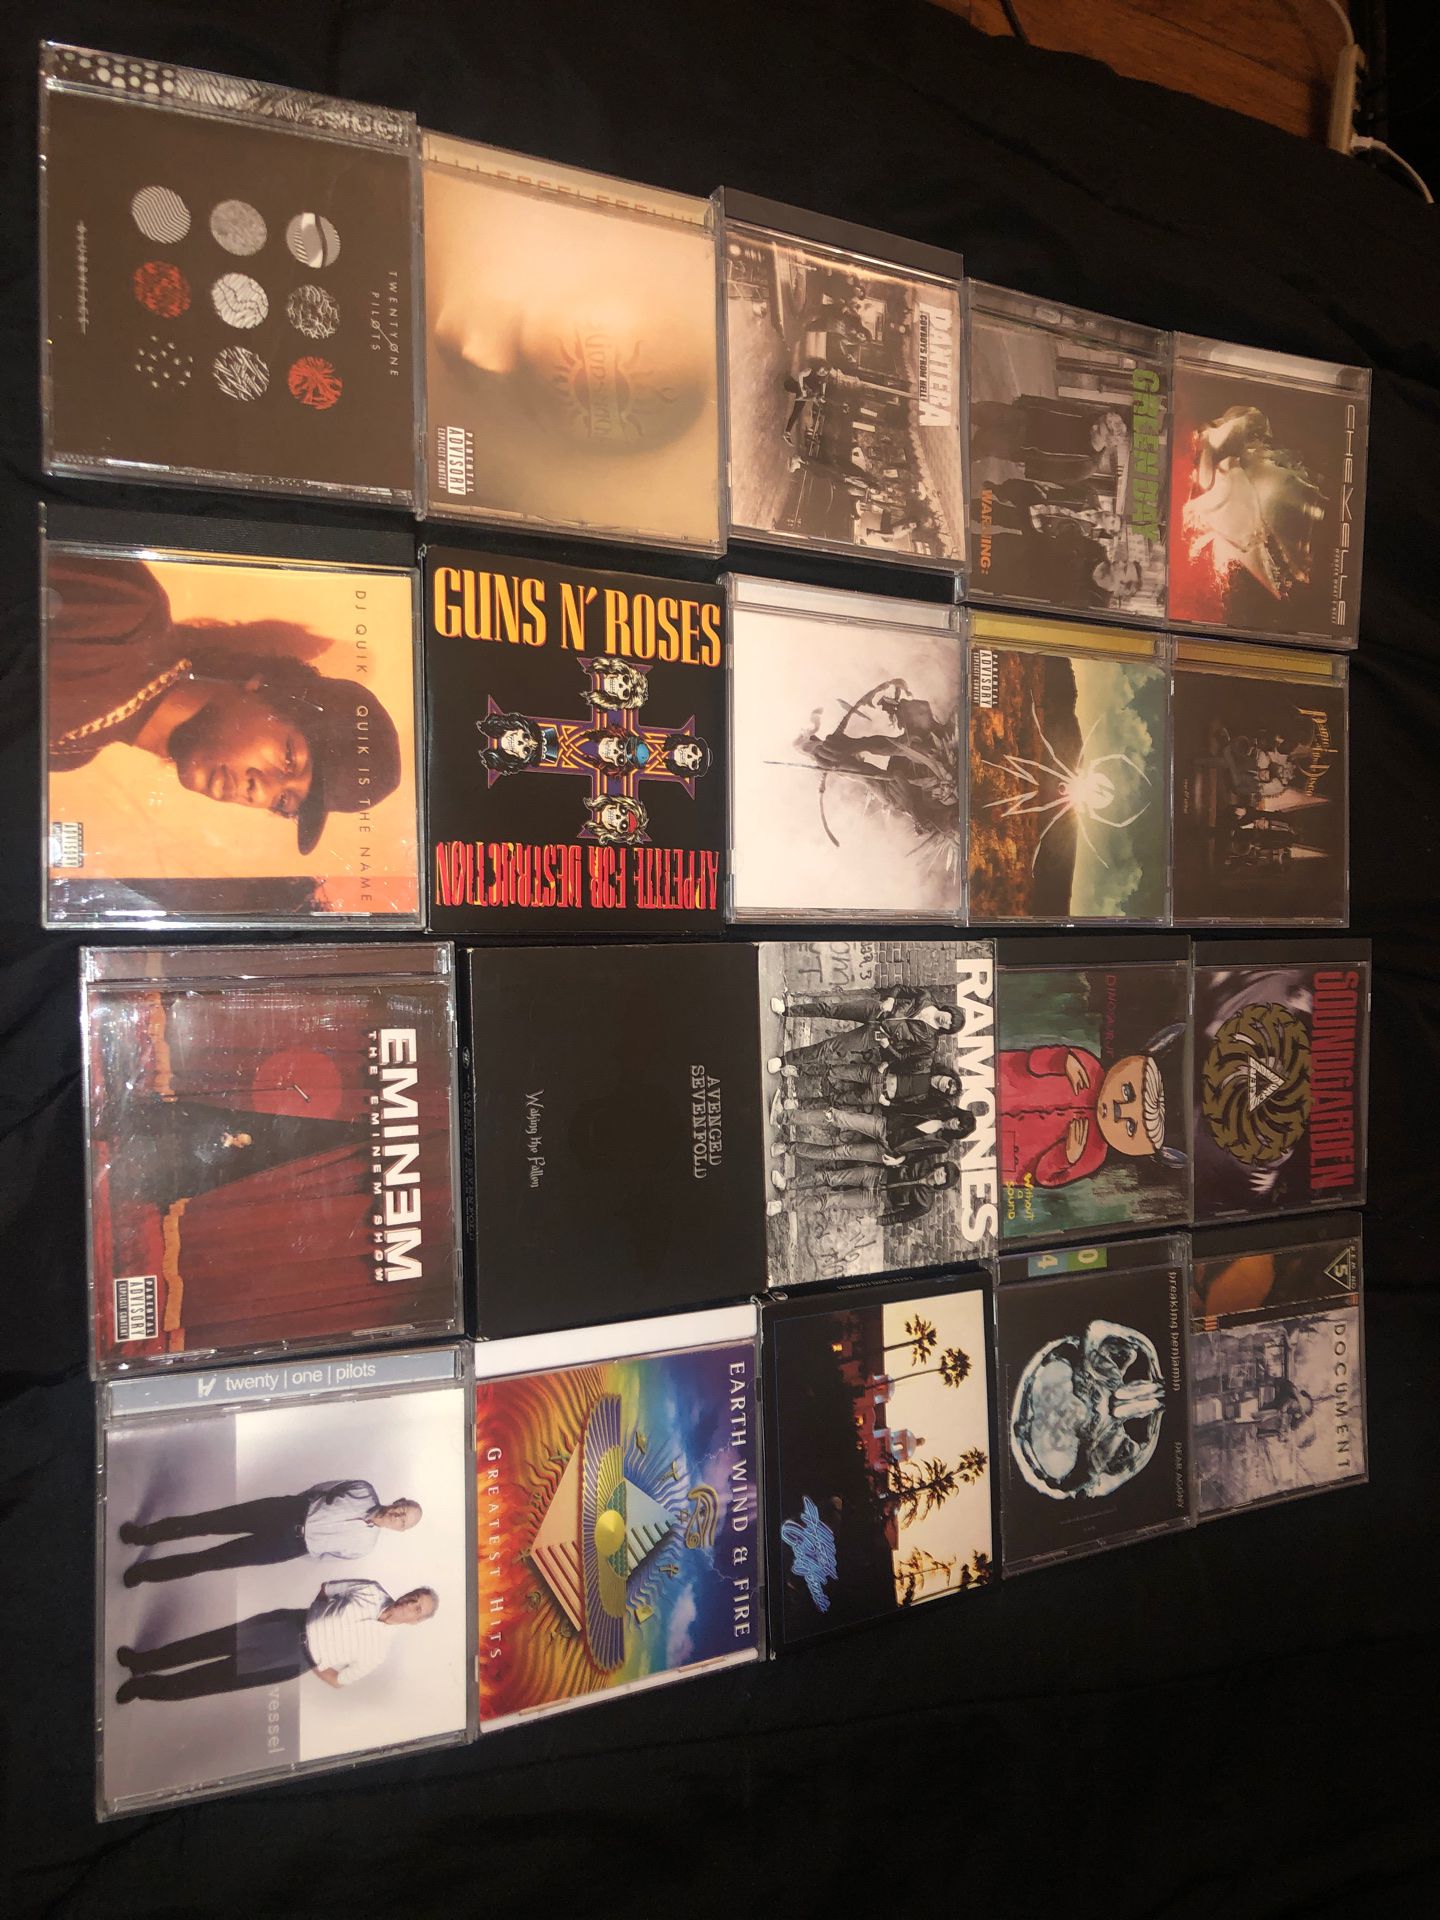 20 cds Read description: Green Day, Linkin Park, Eminem, Twenty One Pilots, Pantera, Dj quik, Guns N Roses and More